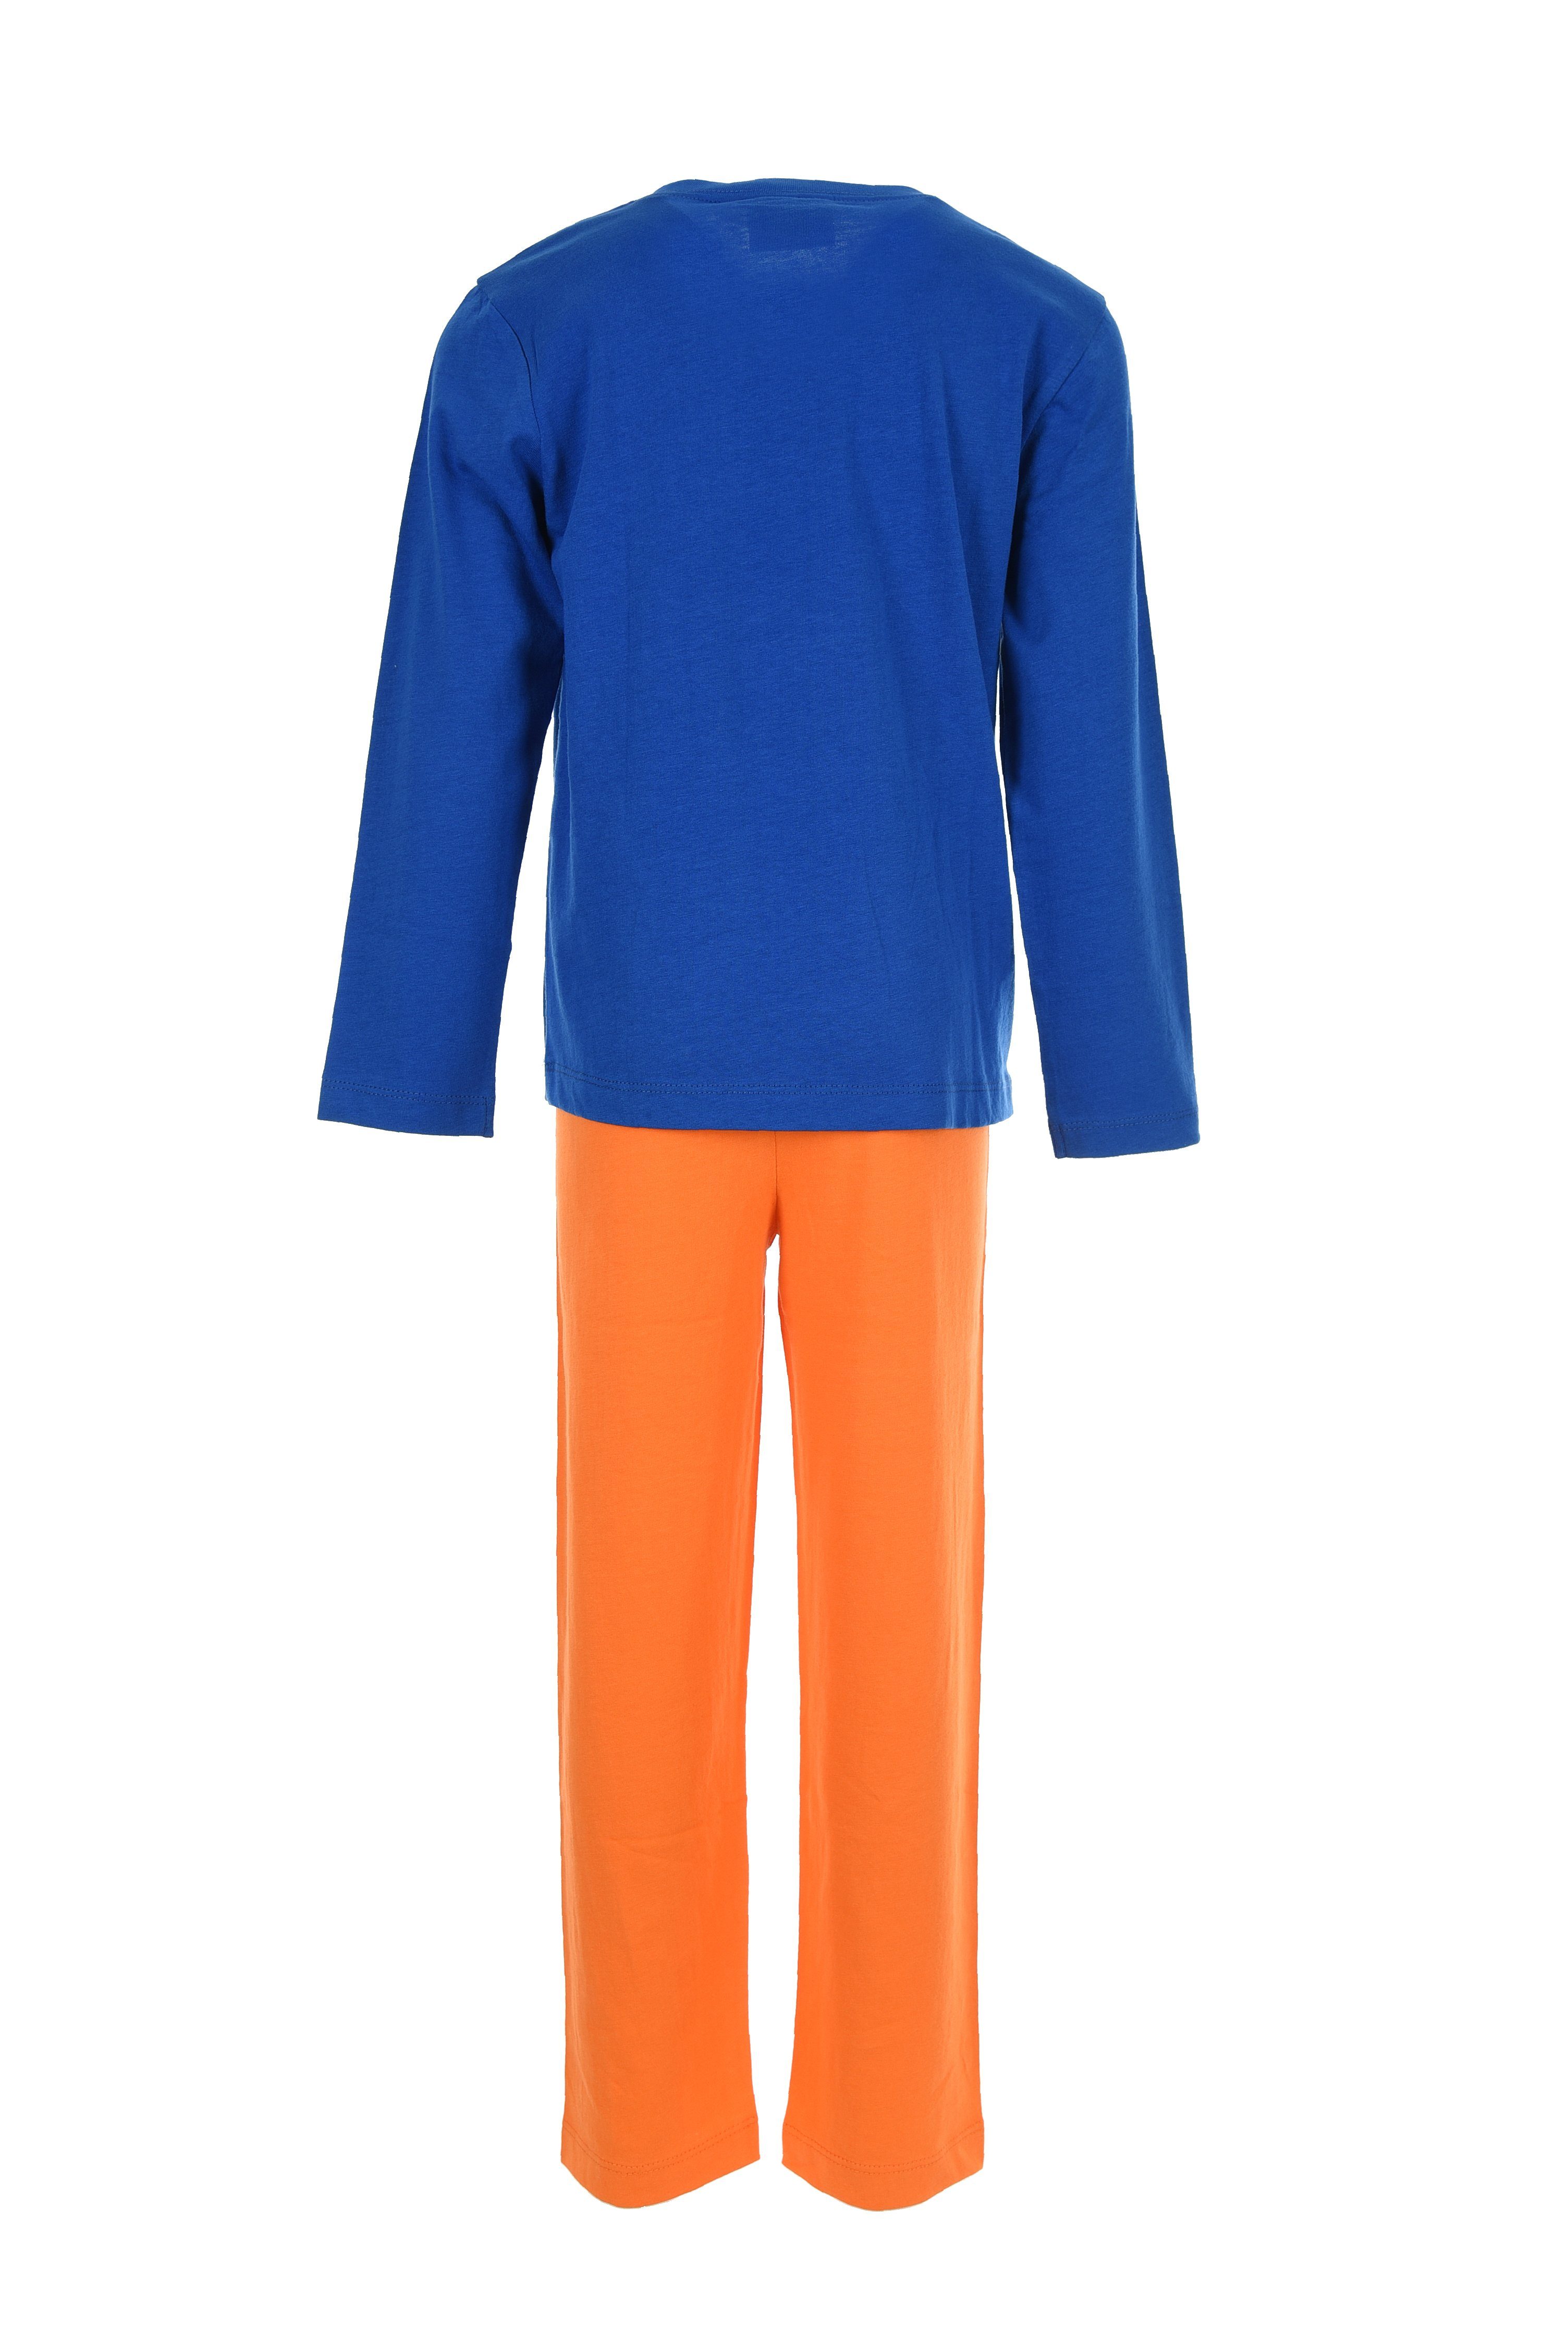 Blau-Orange PAW Jungen Paw Schlafanzug Schlafanzug Patrol langarm PATROL